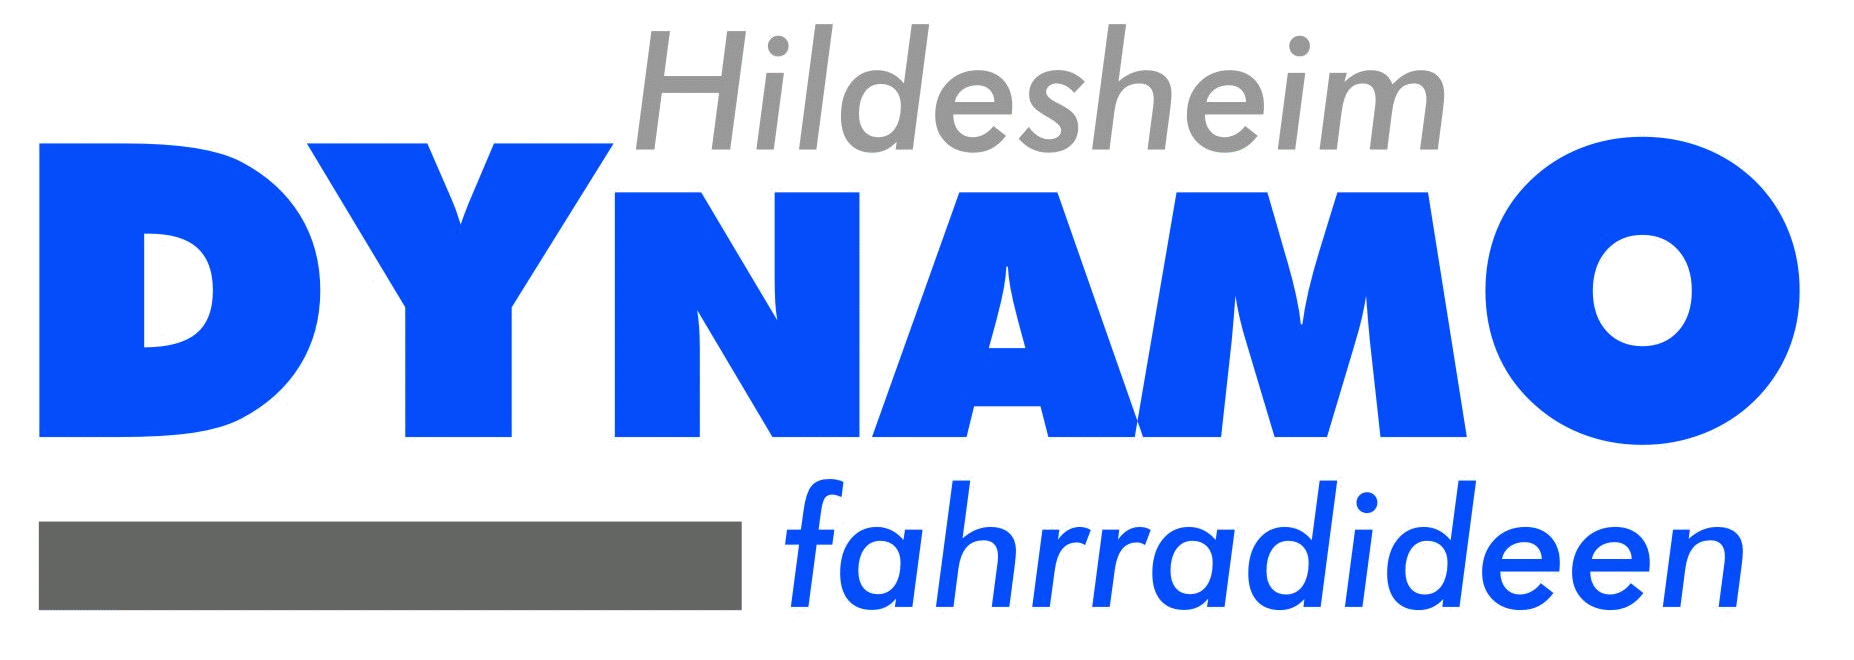 Dynamo Fahrradideen Hildesheim